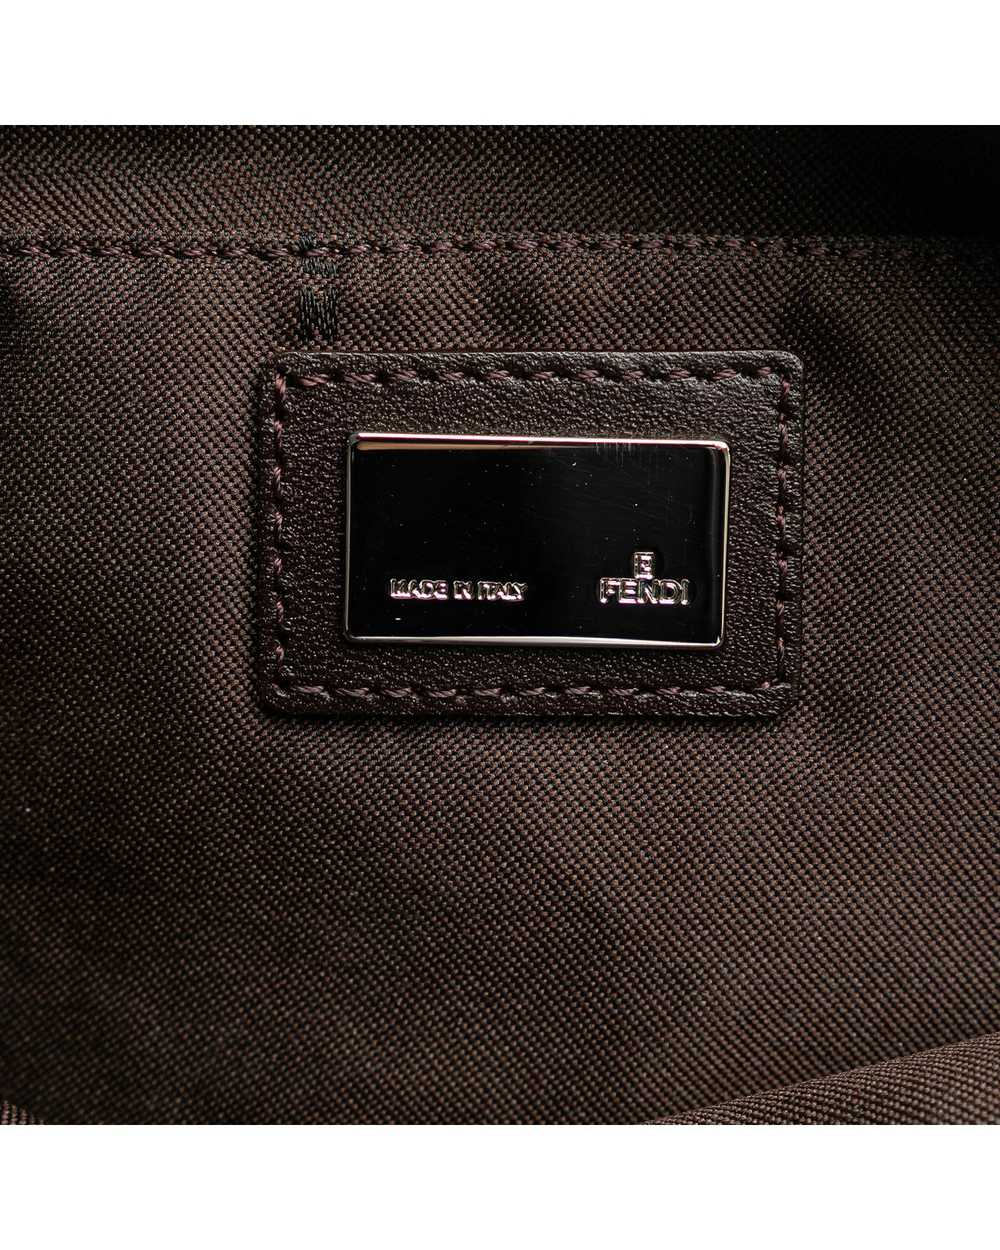 Fendi Denim Shoulder Bag with Top Zip Closure - image 6